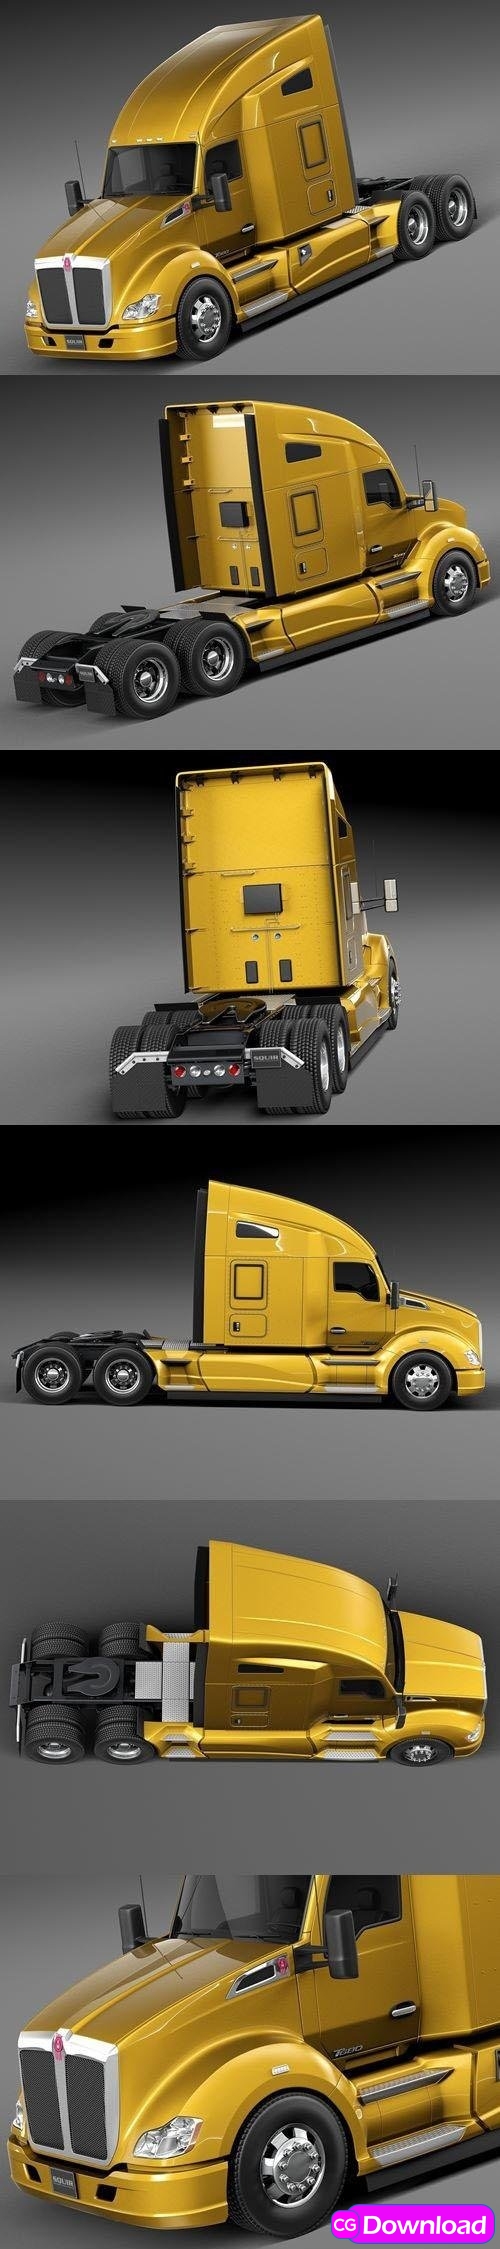 Trailer Truck 3d Model Free Download